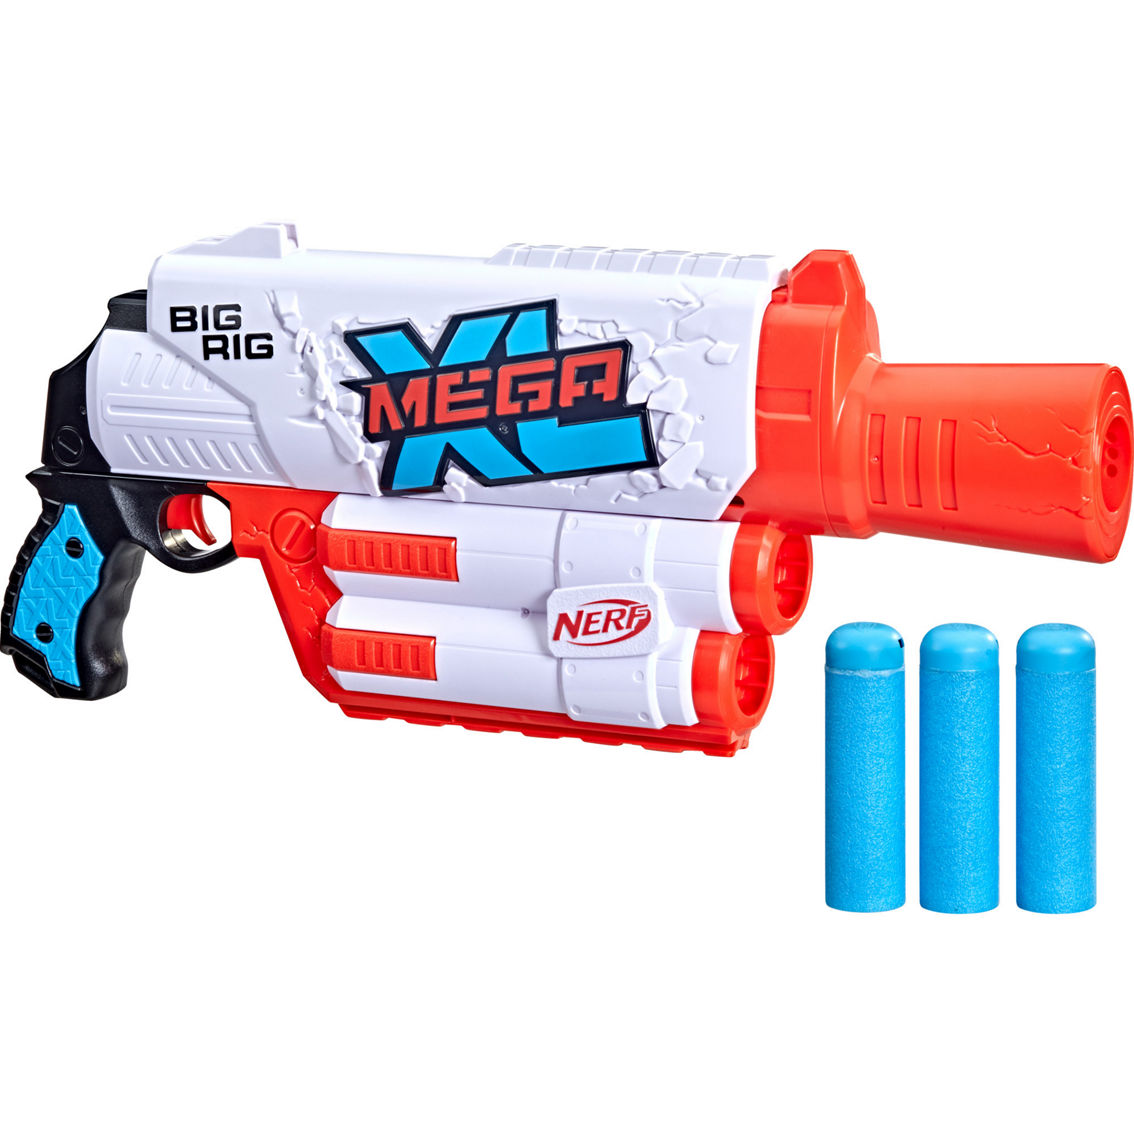 Nerf Mega XL Big Rig Blaster Toy - Image 5 of 6